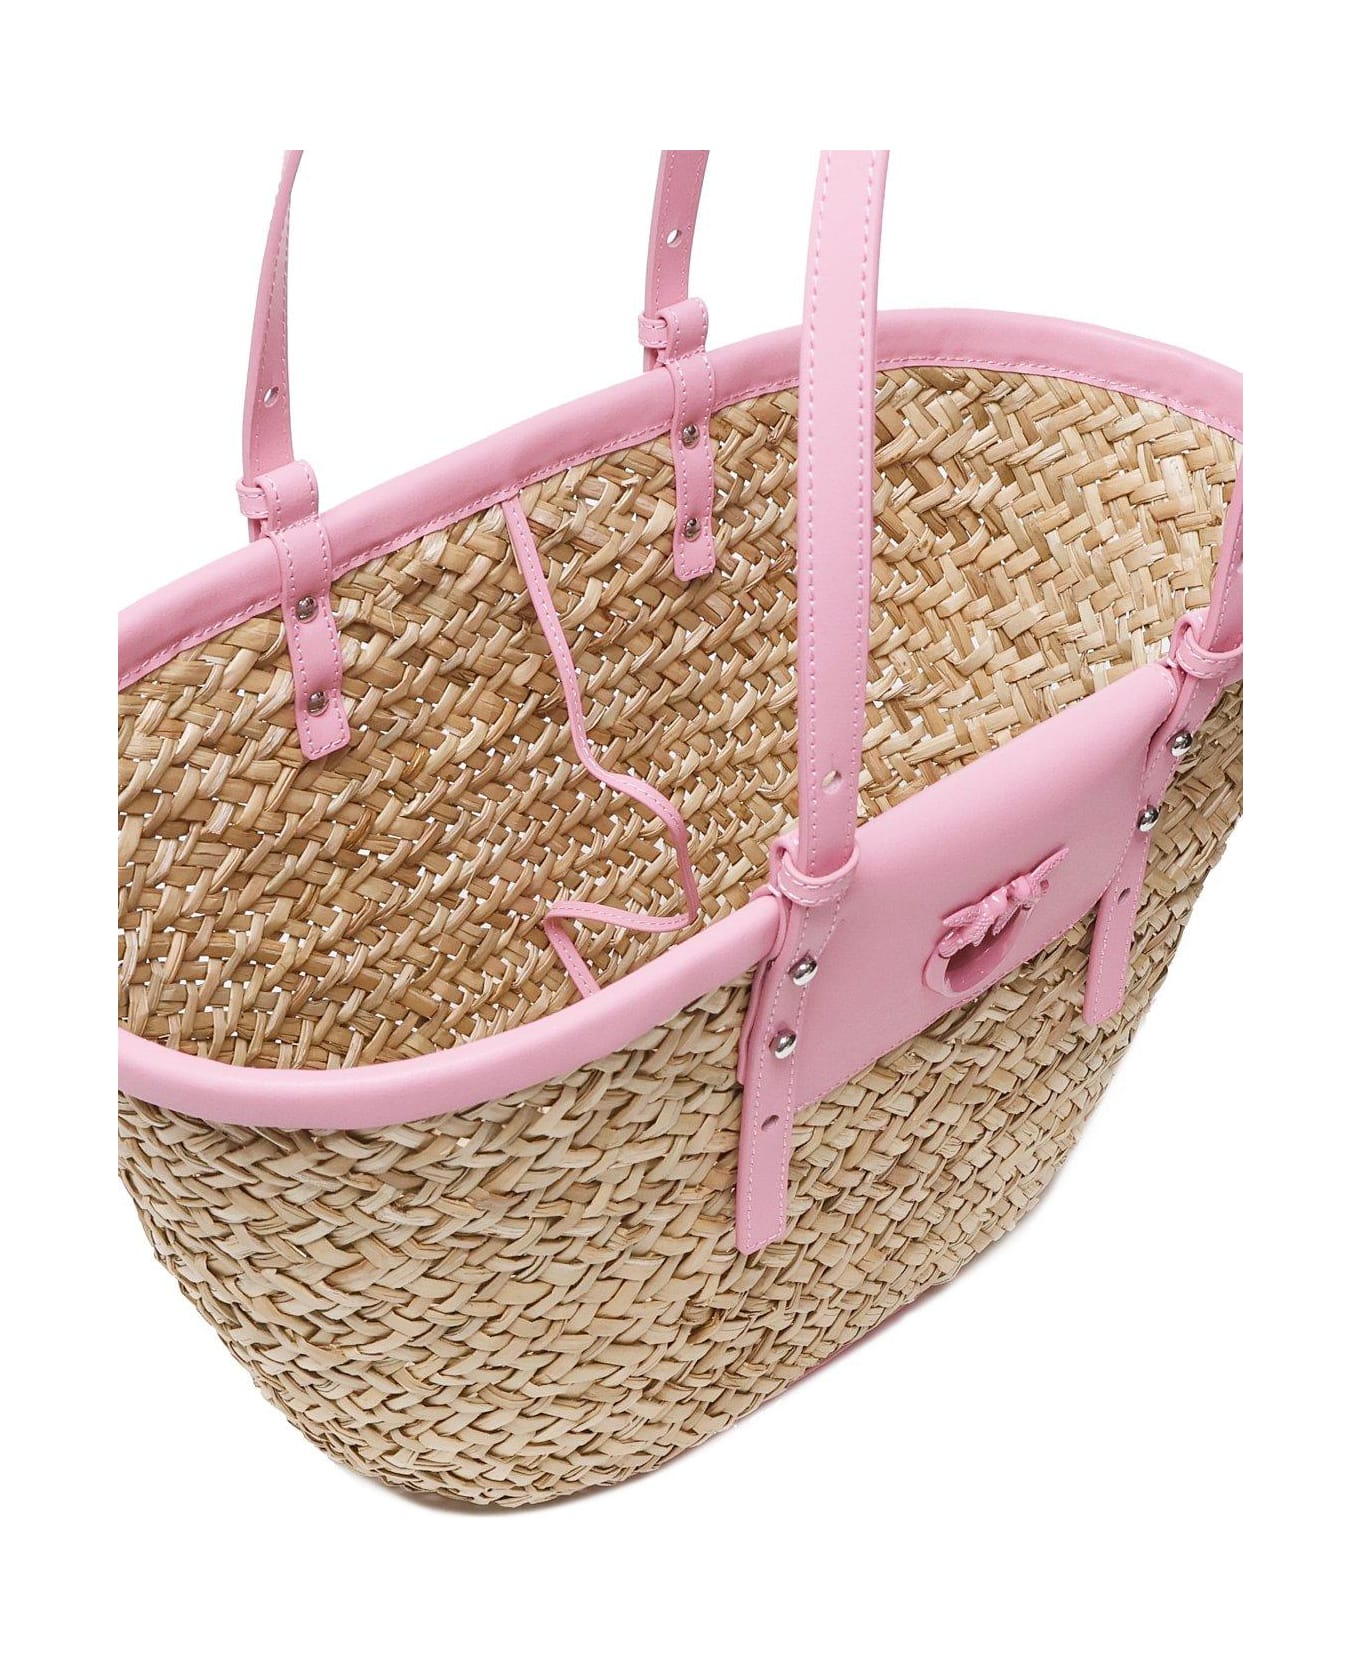 Pinko Love Summer Logo Detailed Tote Bag - Naturale/rosa-block color